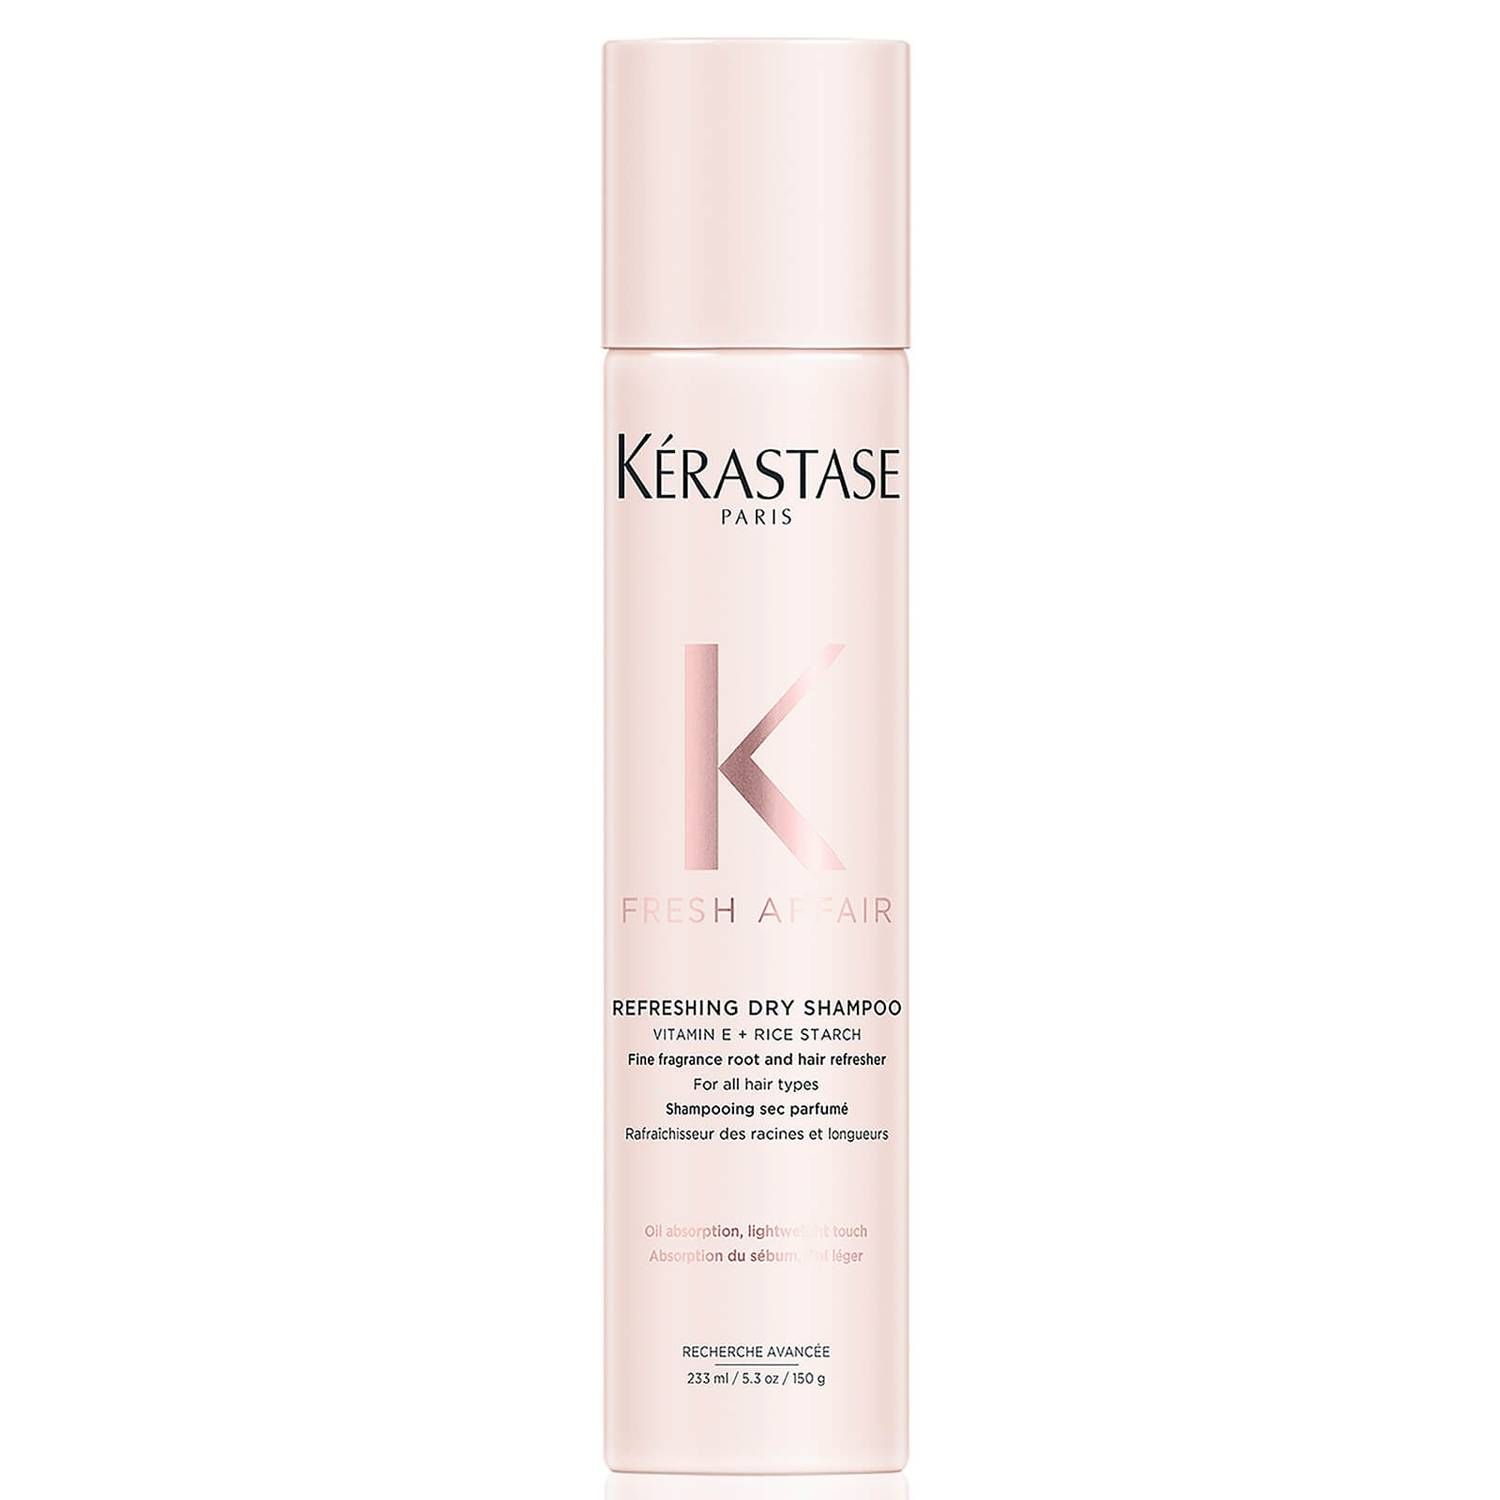 Kérastase Fresh Affair Dry Shampoo 150g | Look Fantastic (UK)